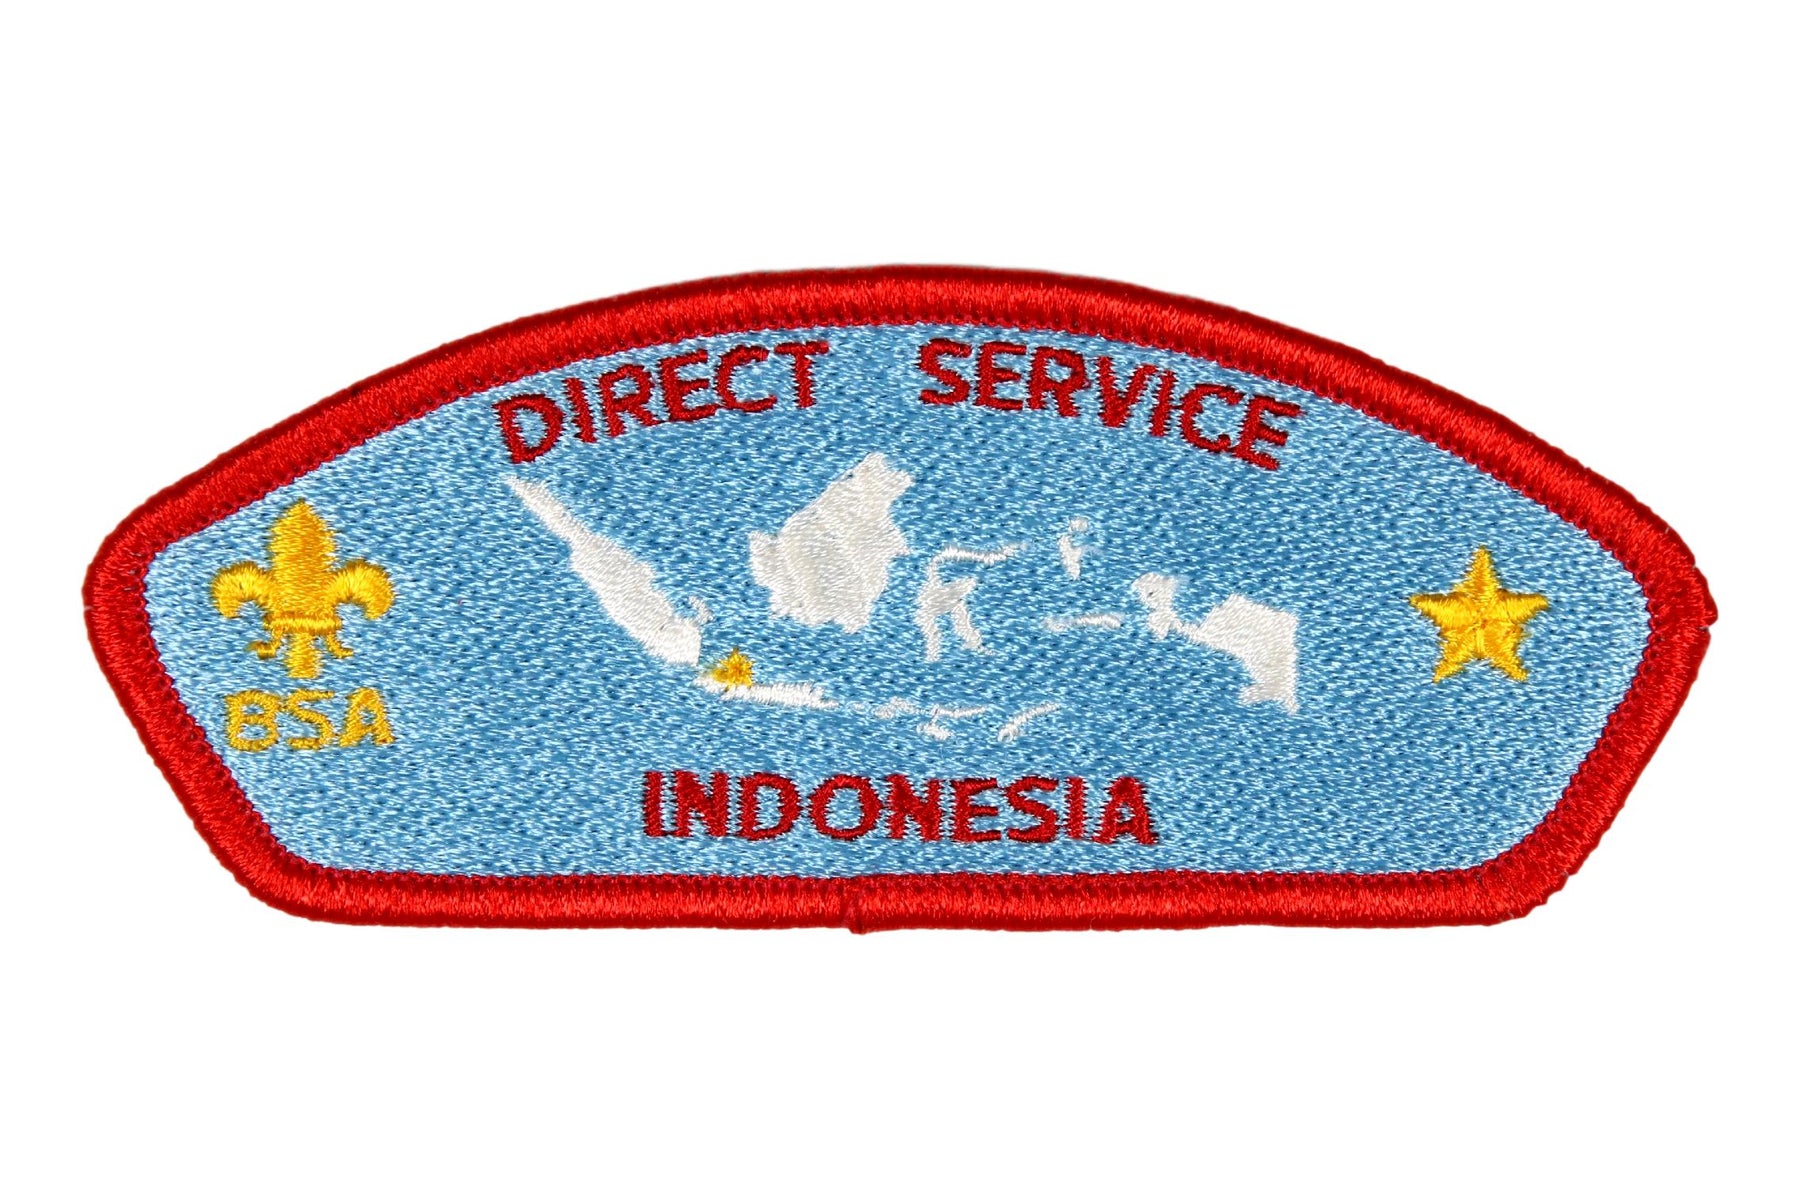 Direct Service CSP Indonesia S-1